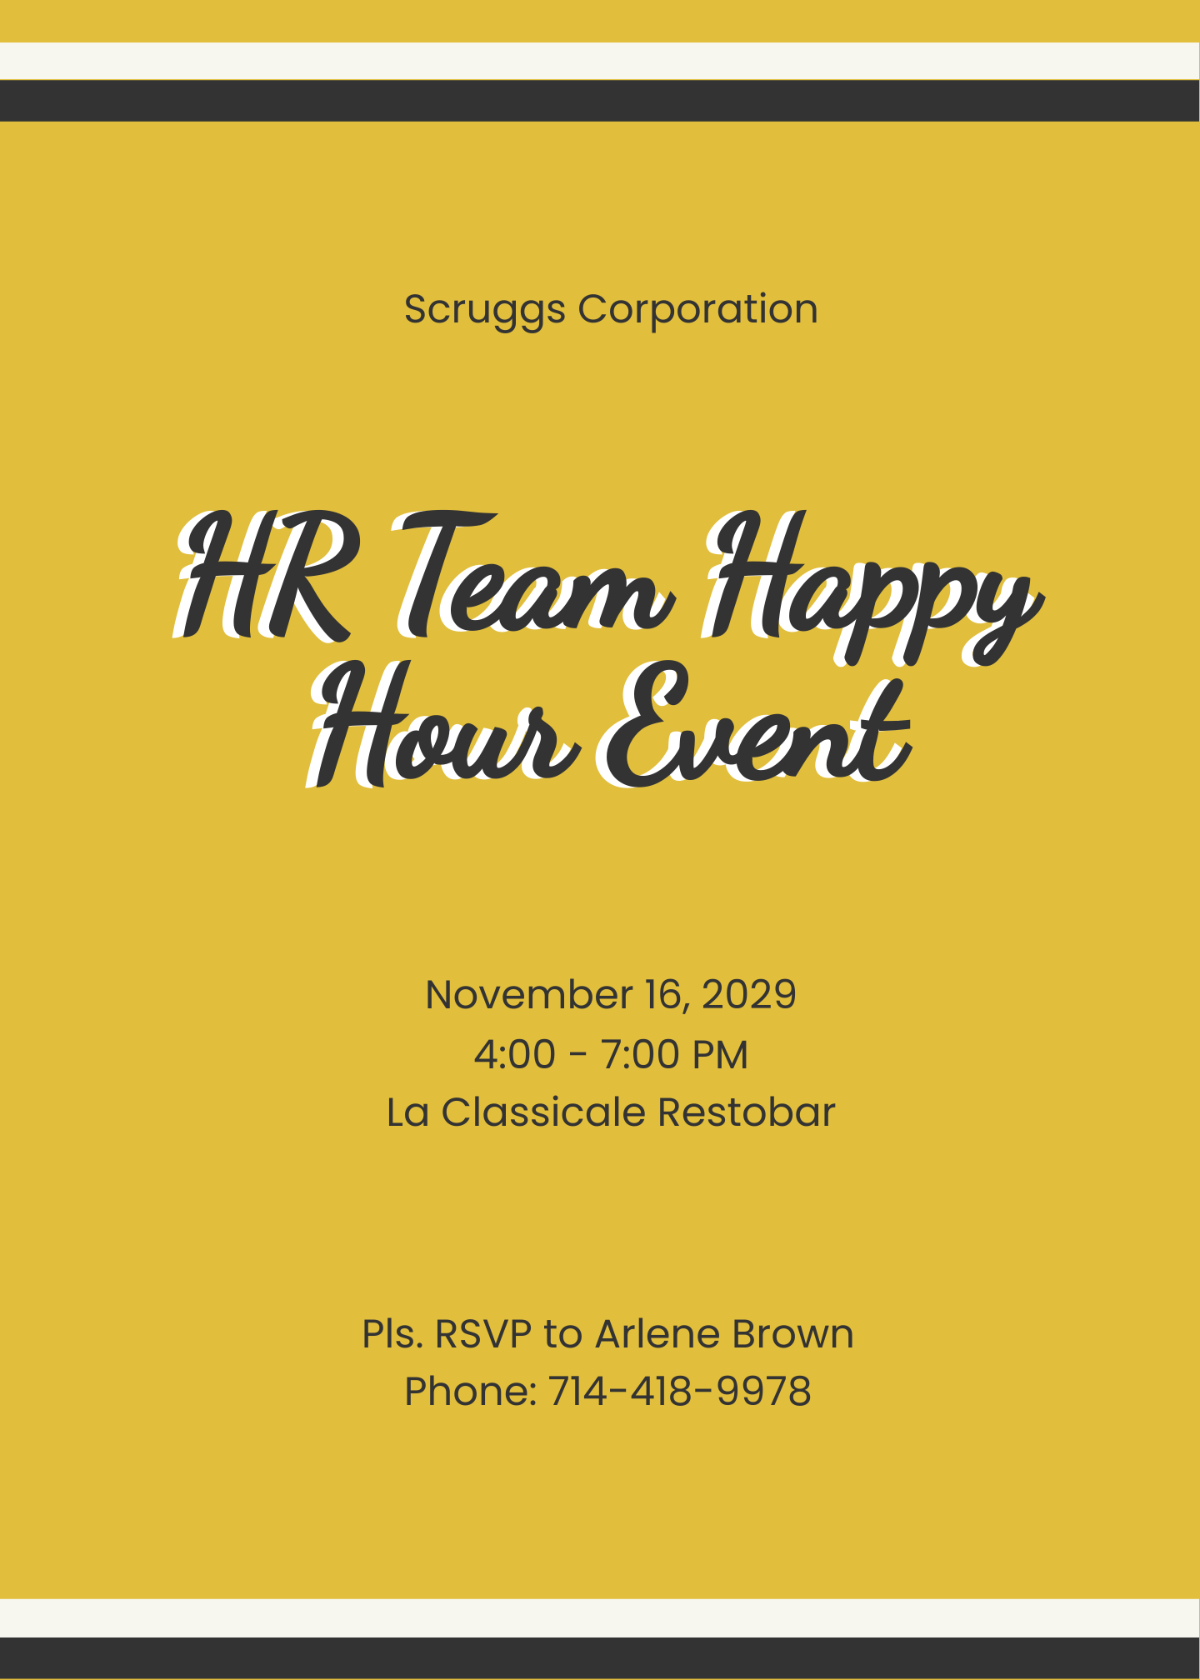 HR Happy Hour Invitation Template